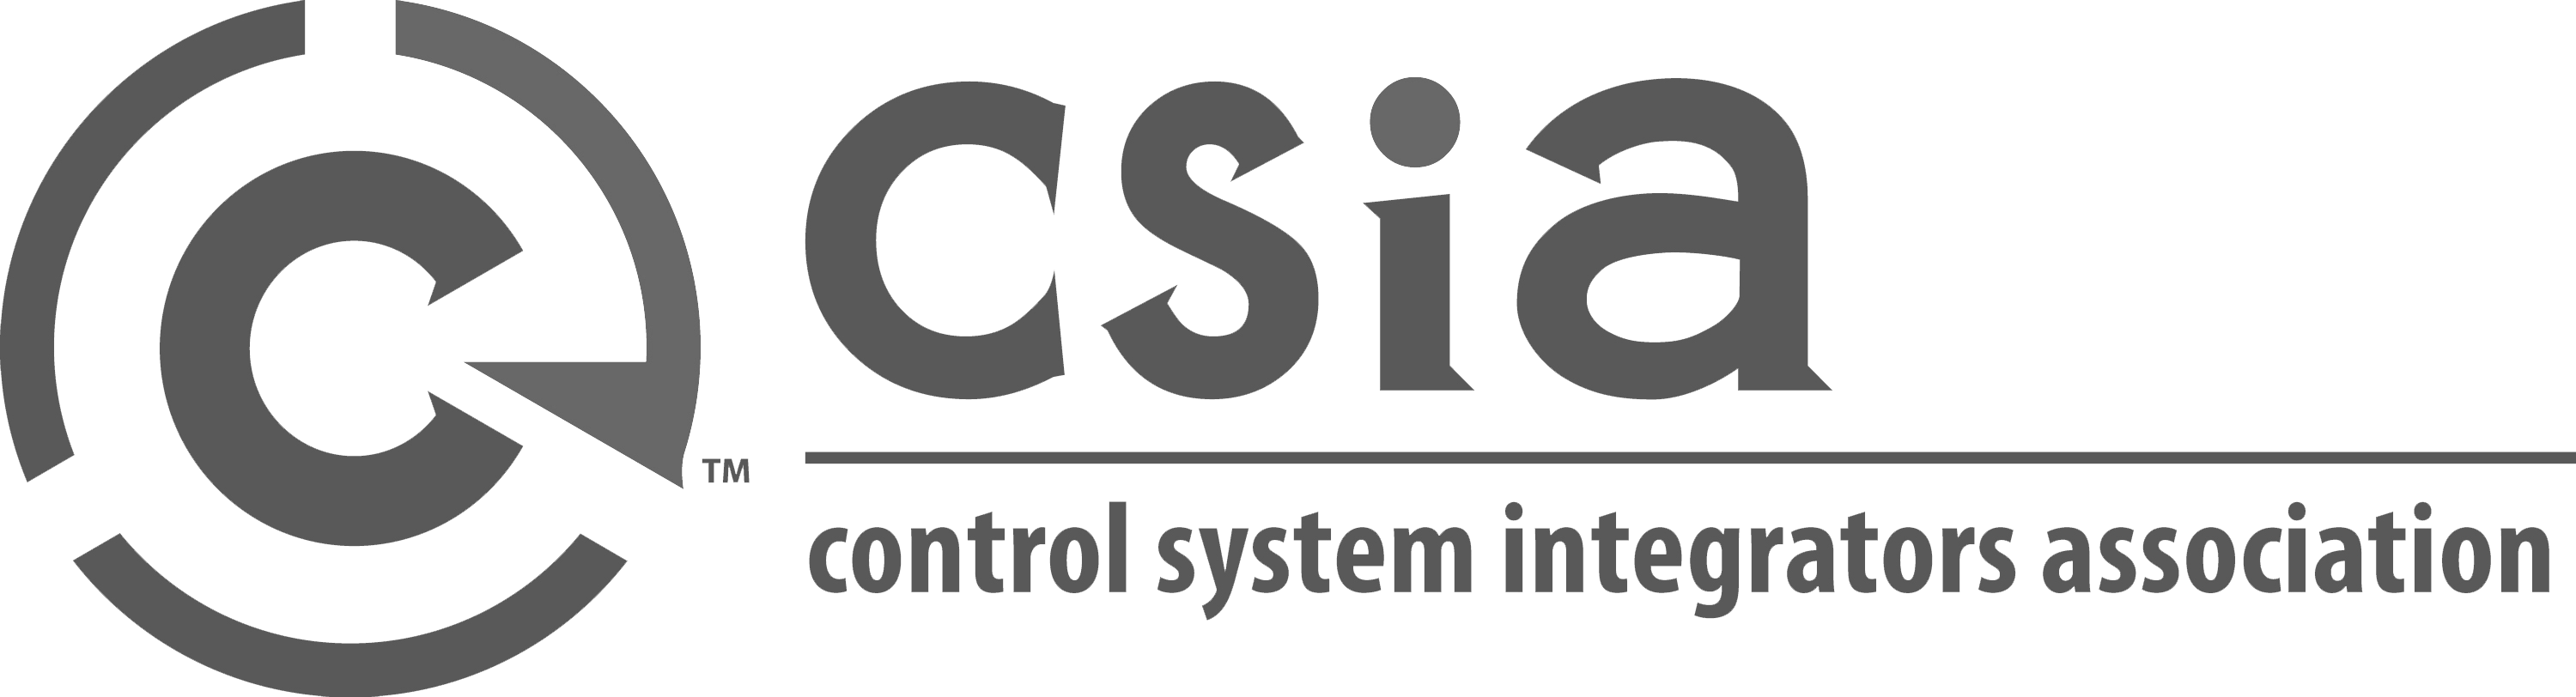 Control System Integrators Association